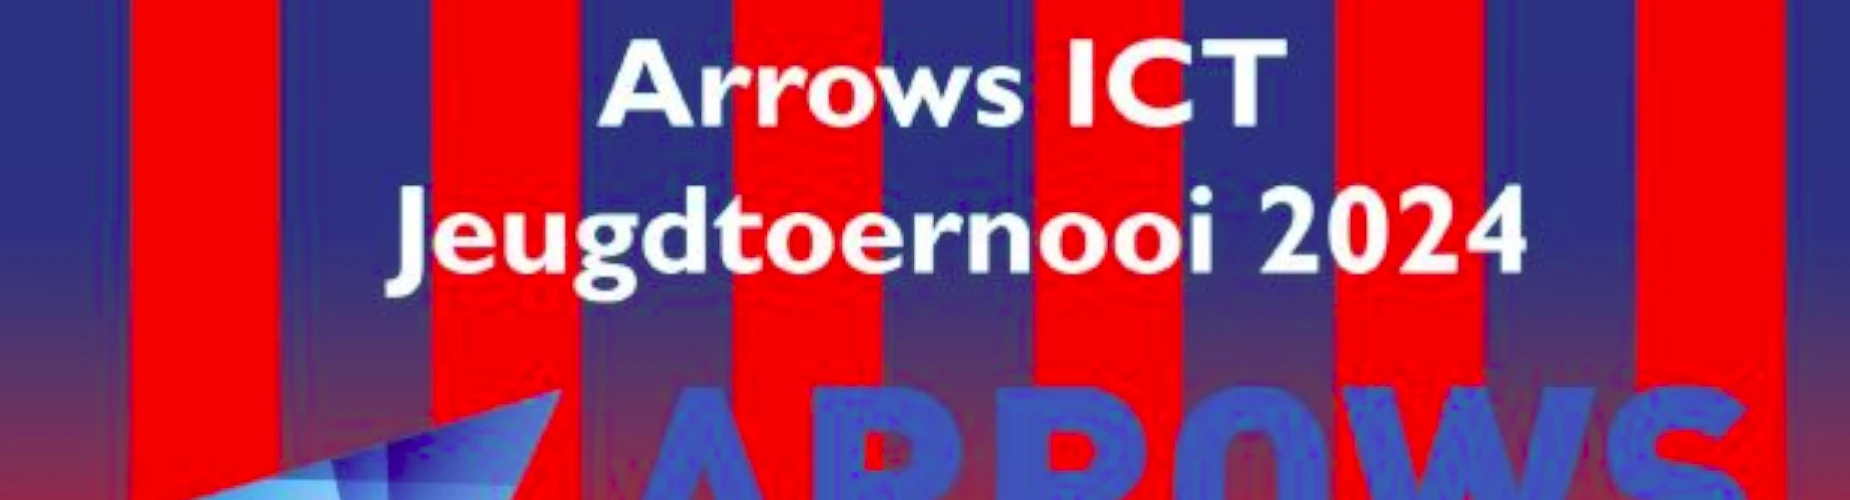 Banner - JO10 - Arrows ICT Jeugdtoernooi 2024 - RKVB - Baexem